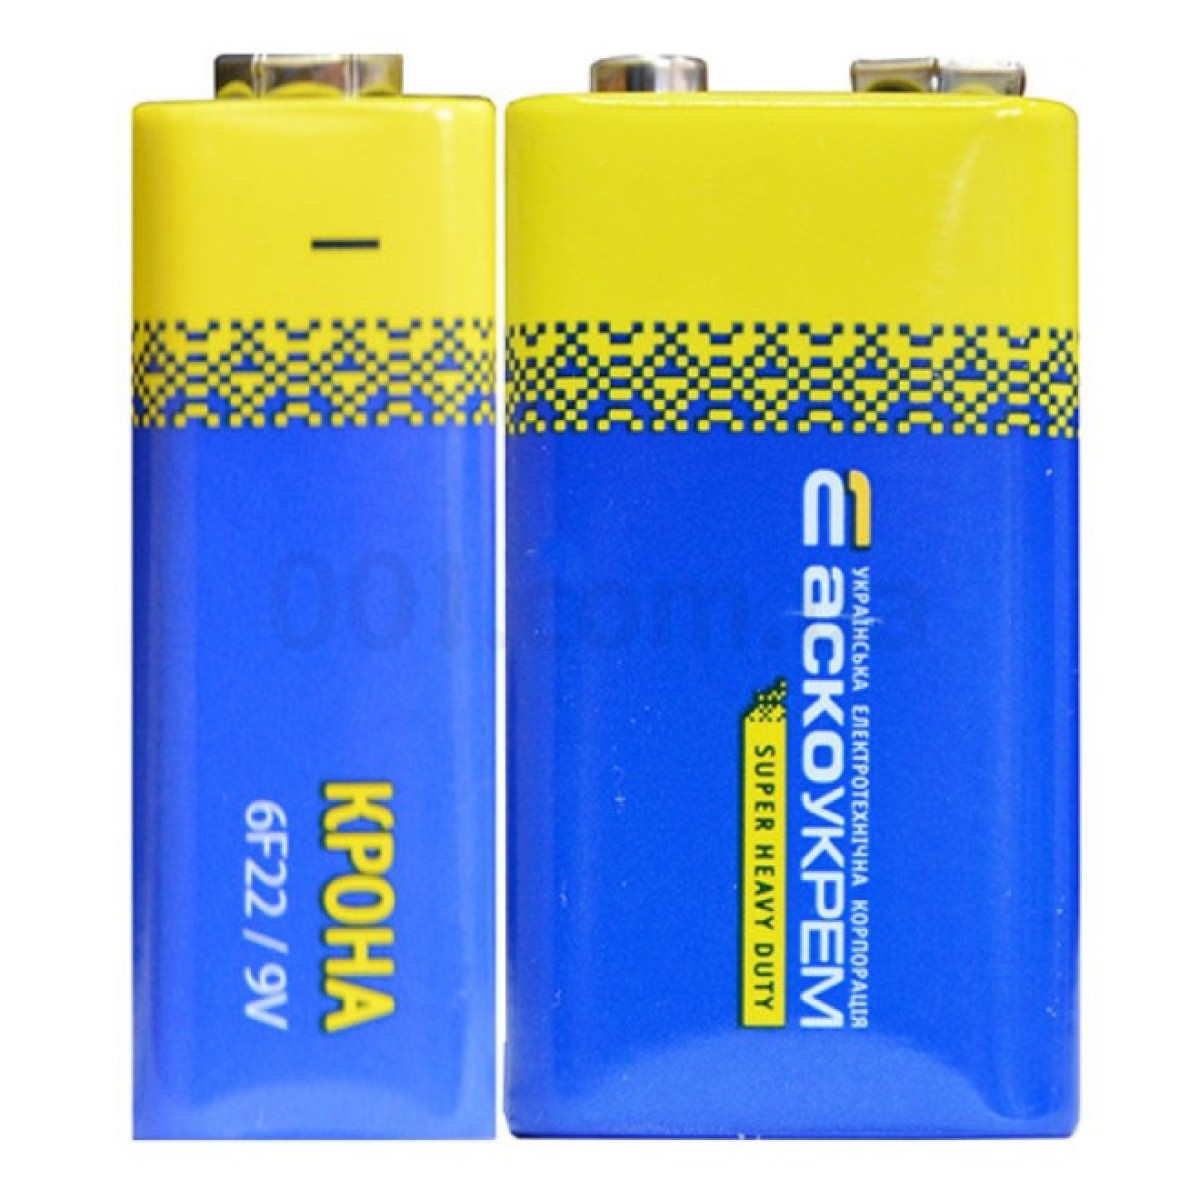 Батарейка солевая Крона.6F22.SP1, типоразмер «Крона» упаковка shrink 1 шт., АСКО-УКРЕМ 256_256.jpg